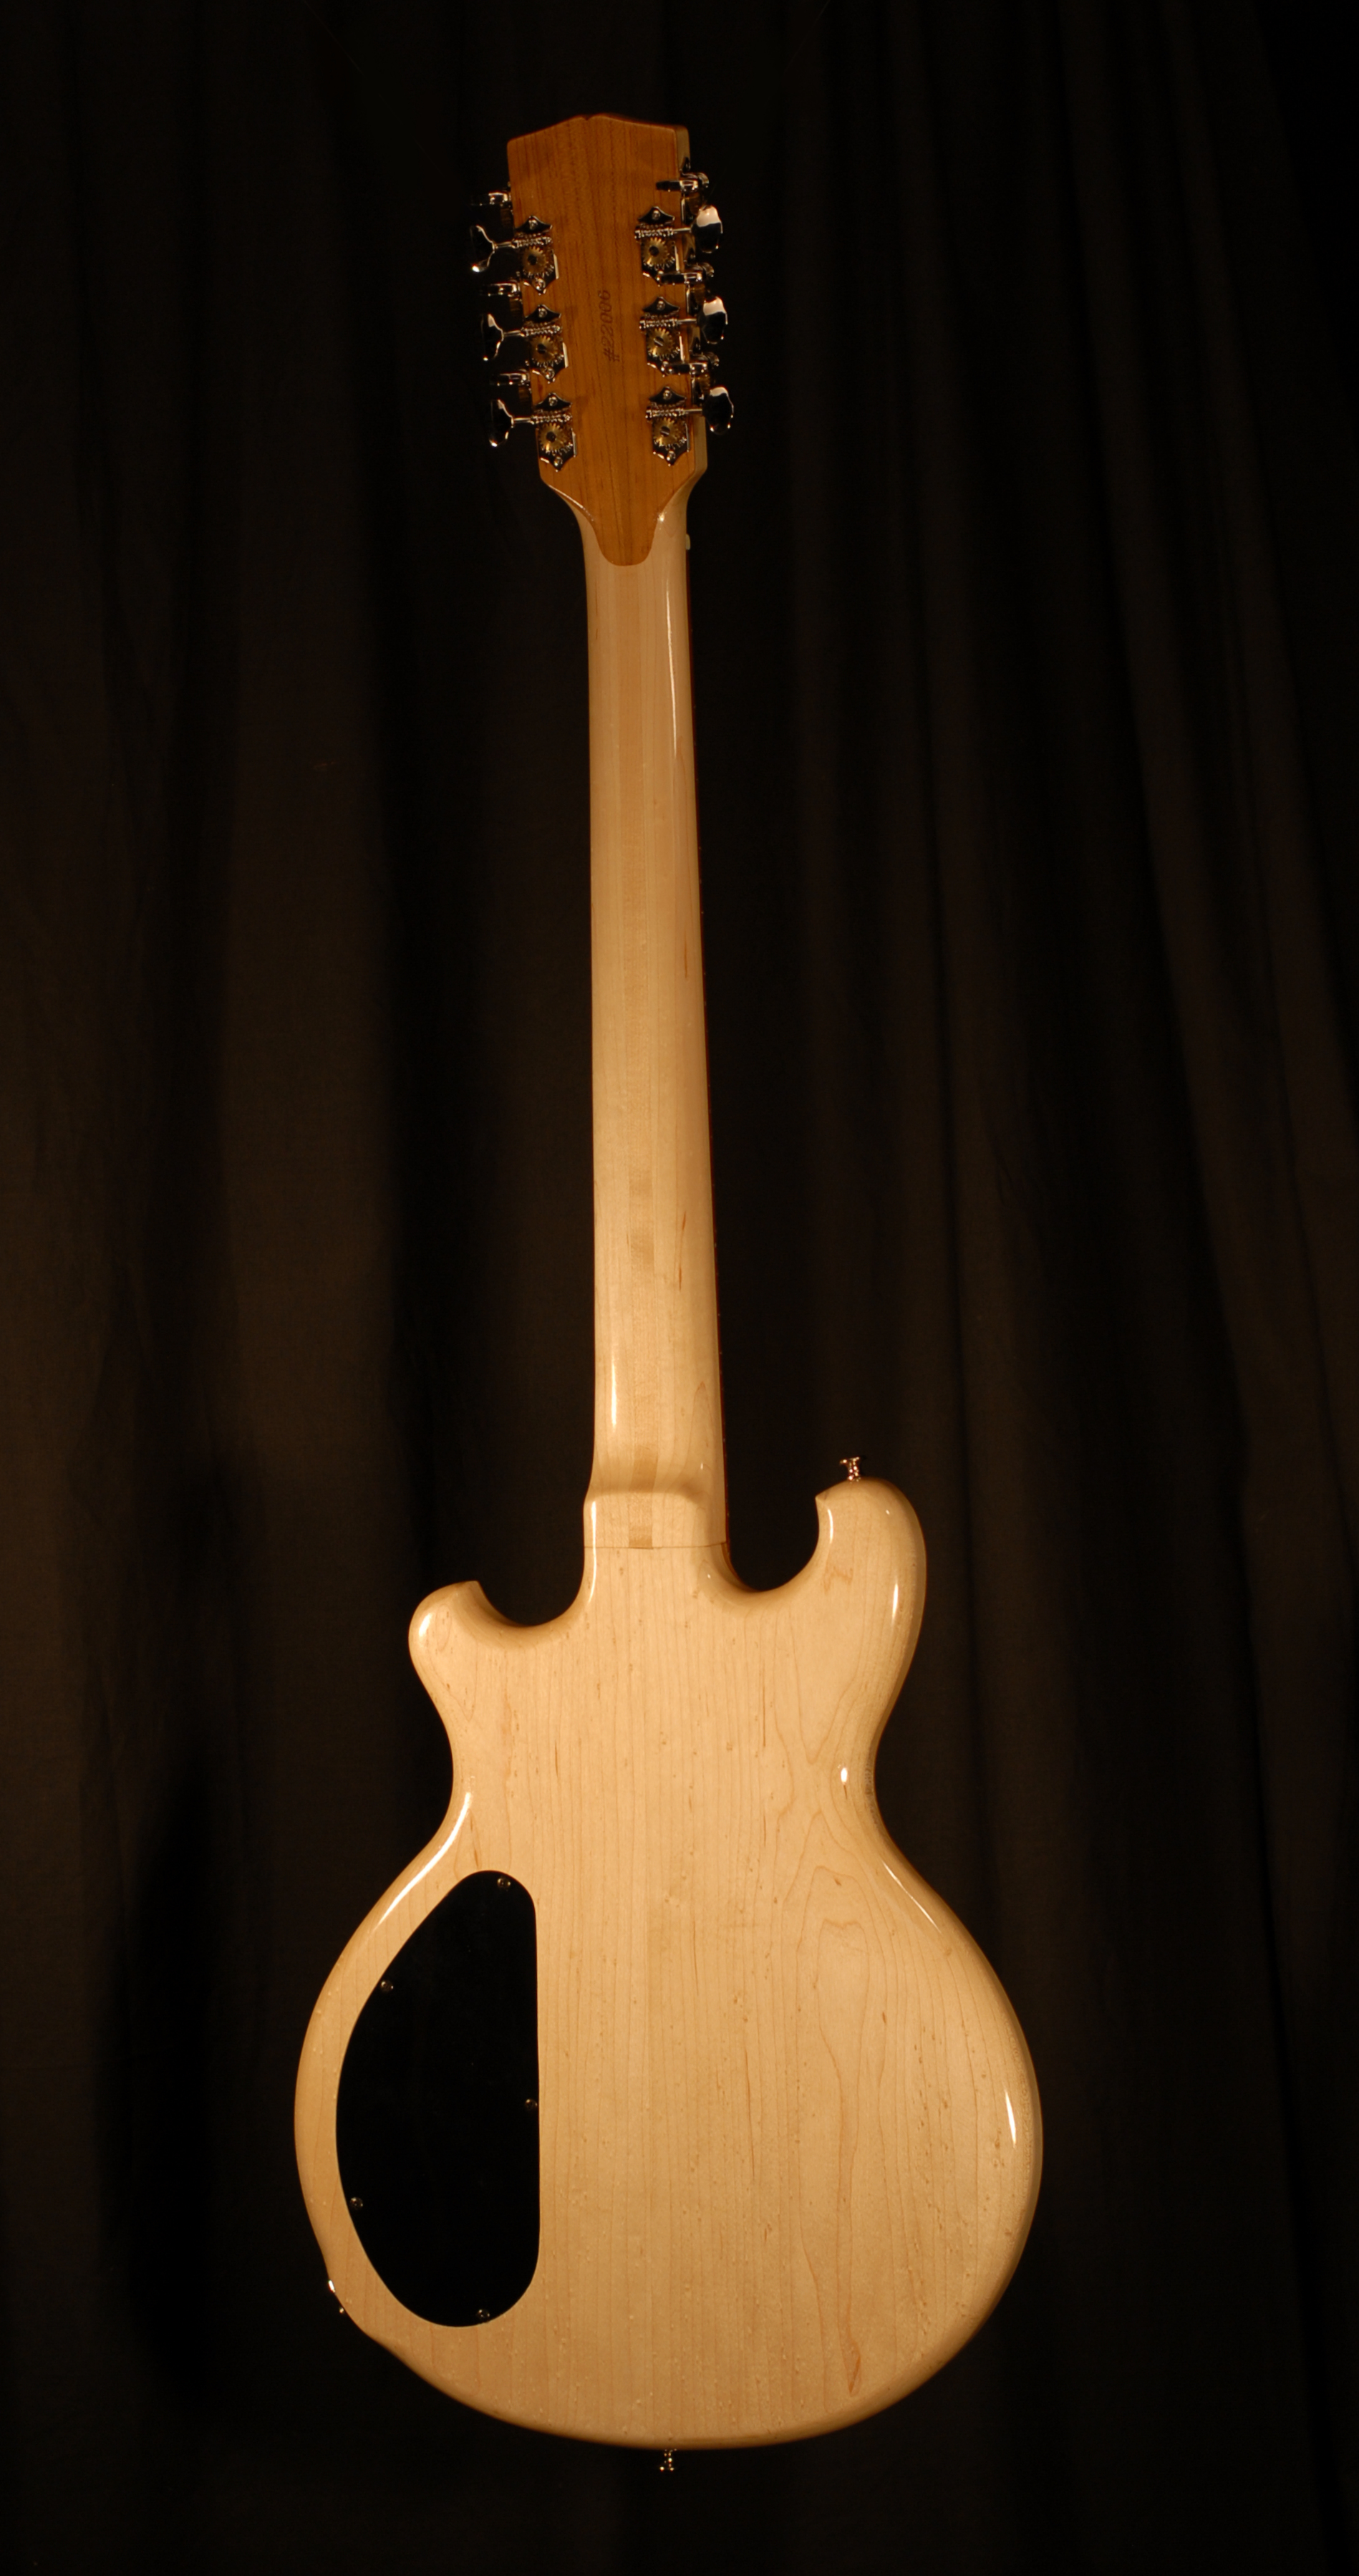 rear view of michael mccarten's double cutaway Electric 12 string guitar model